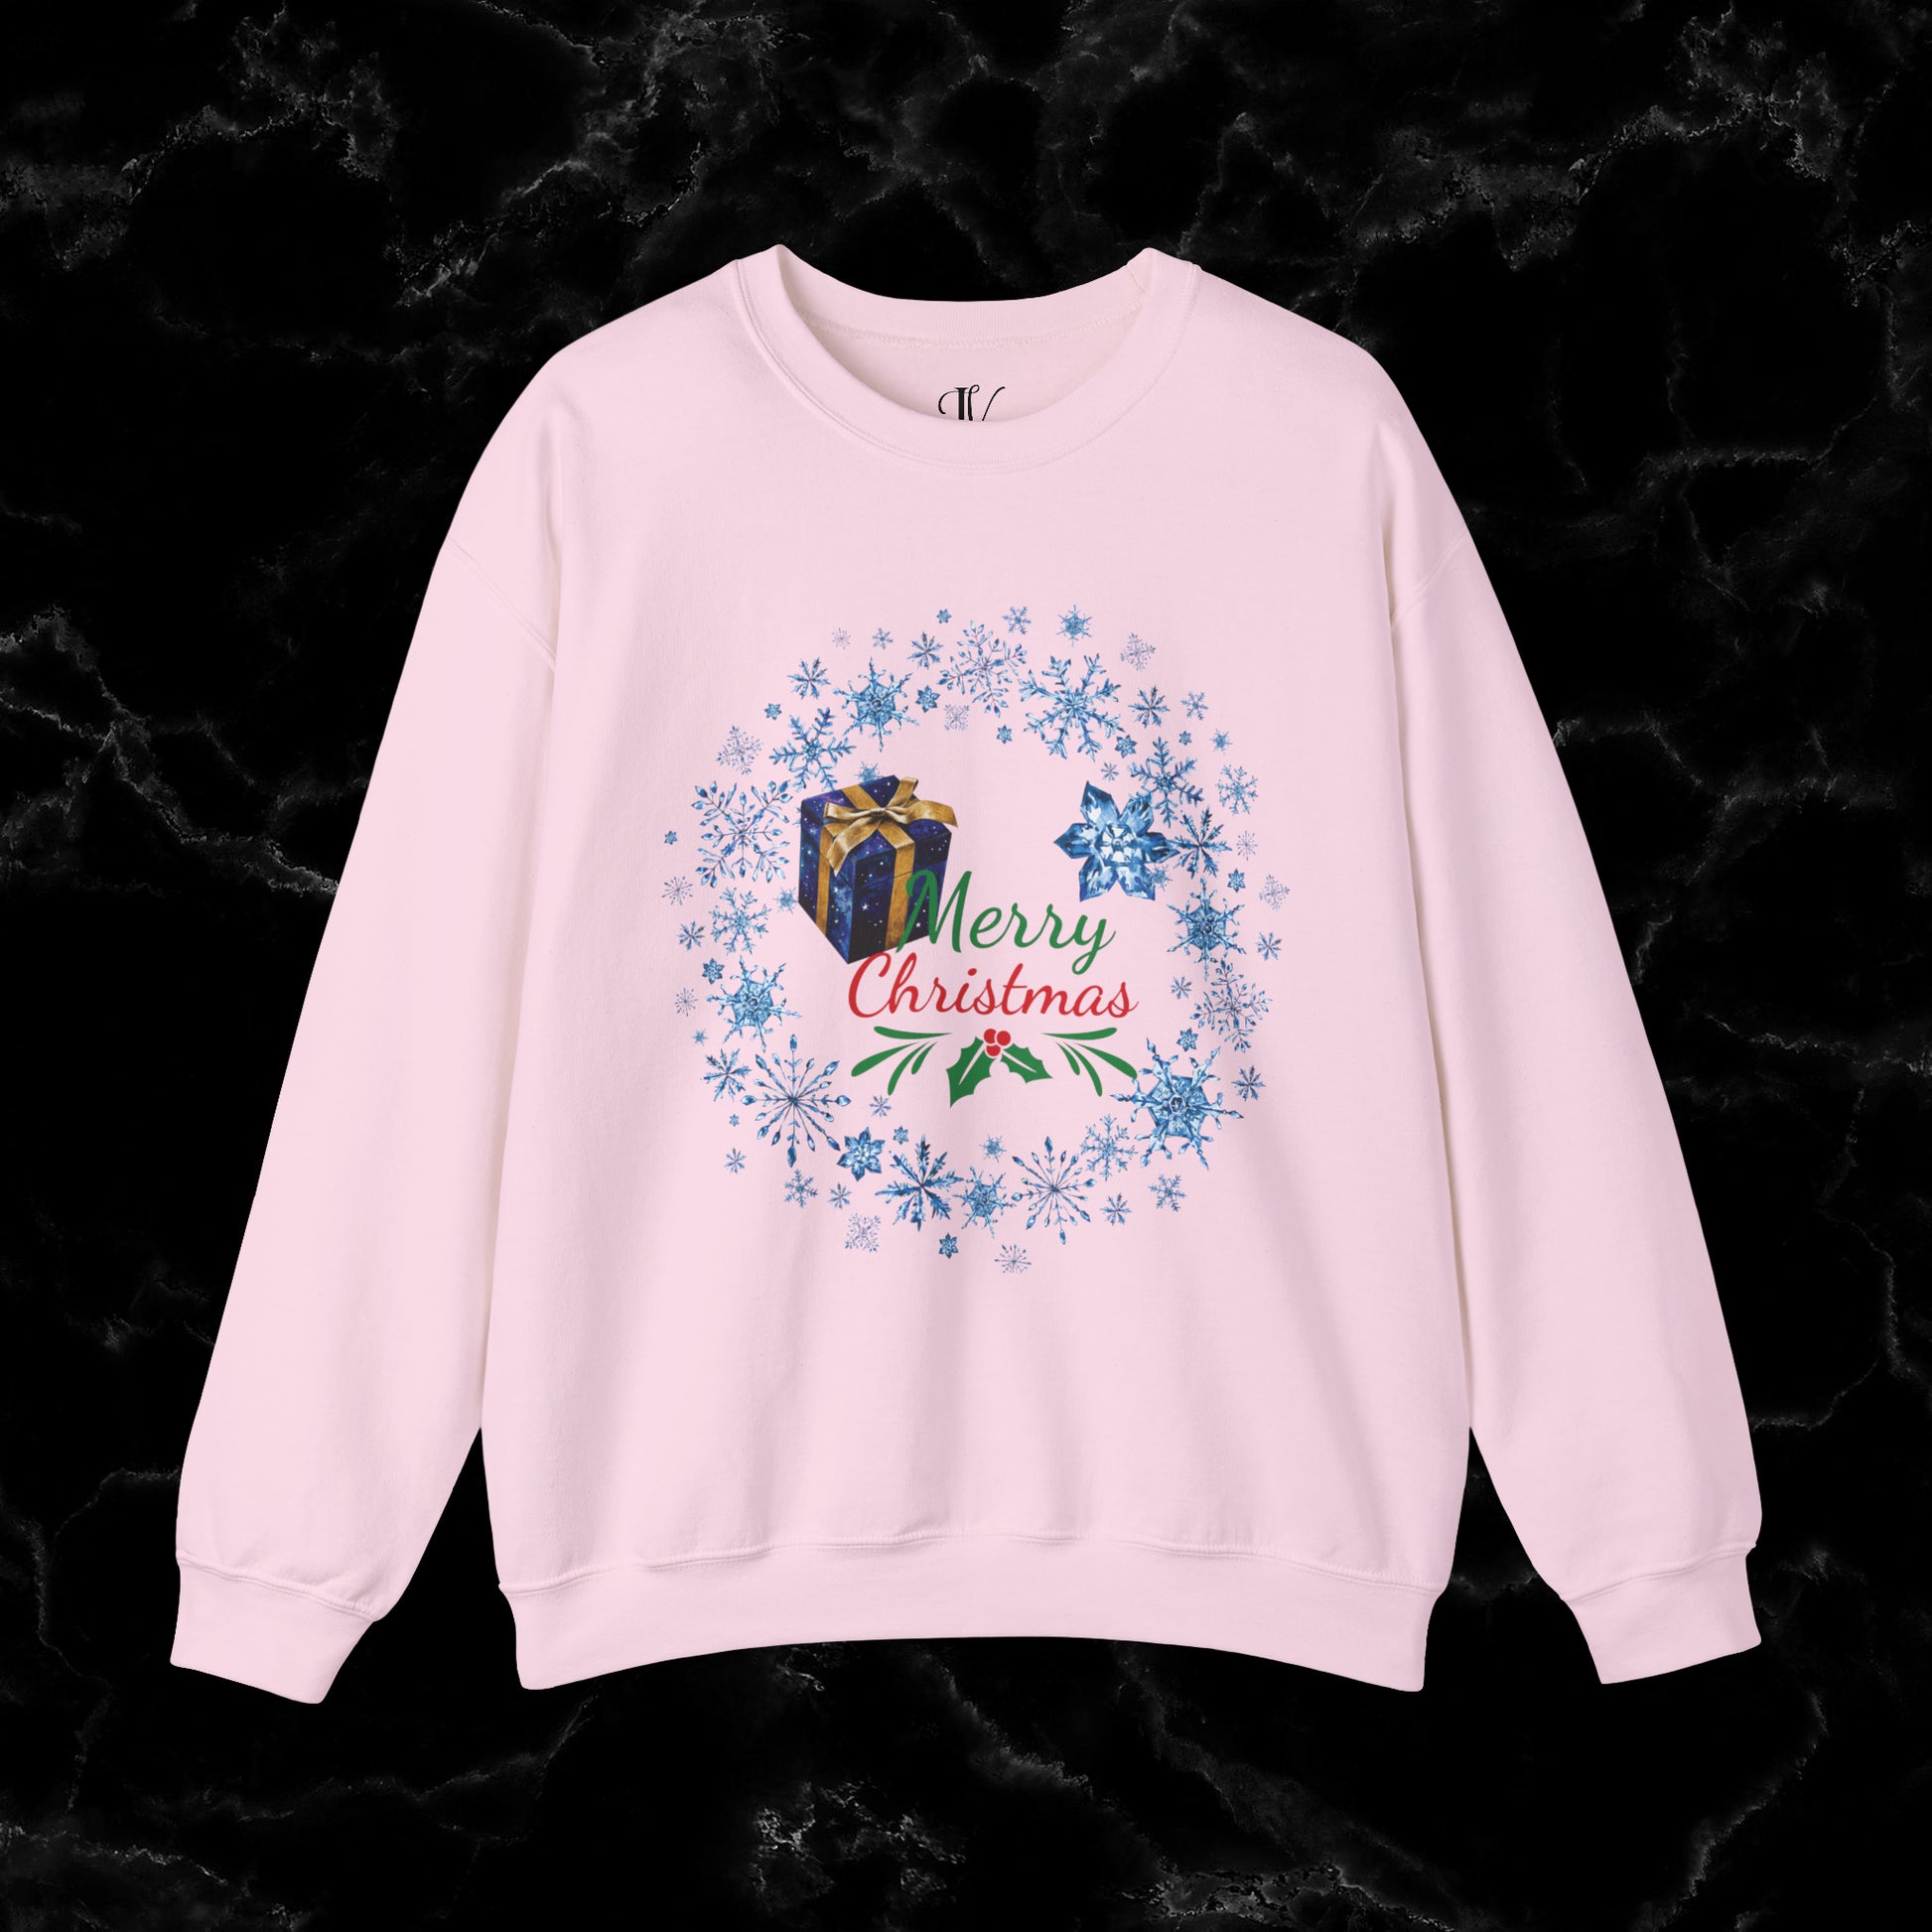 Merry Christmas Sweatshirt - Matching Christmas Shirt, Wreath Design, Holiday Gift Sweatshirt S Light Pink 